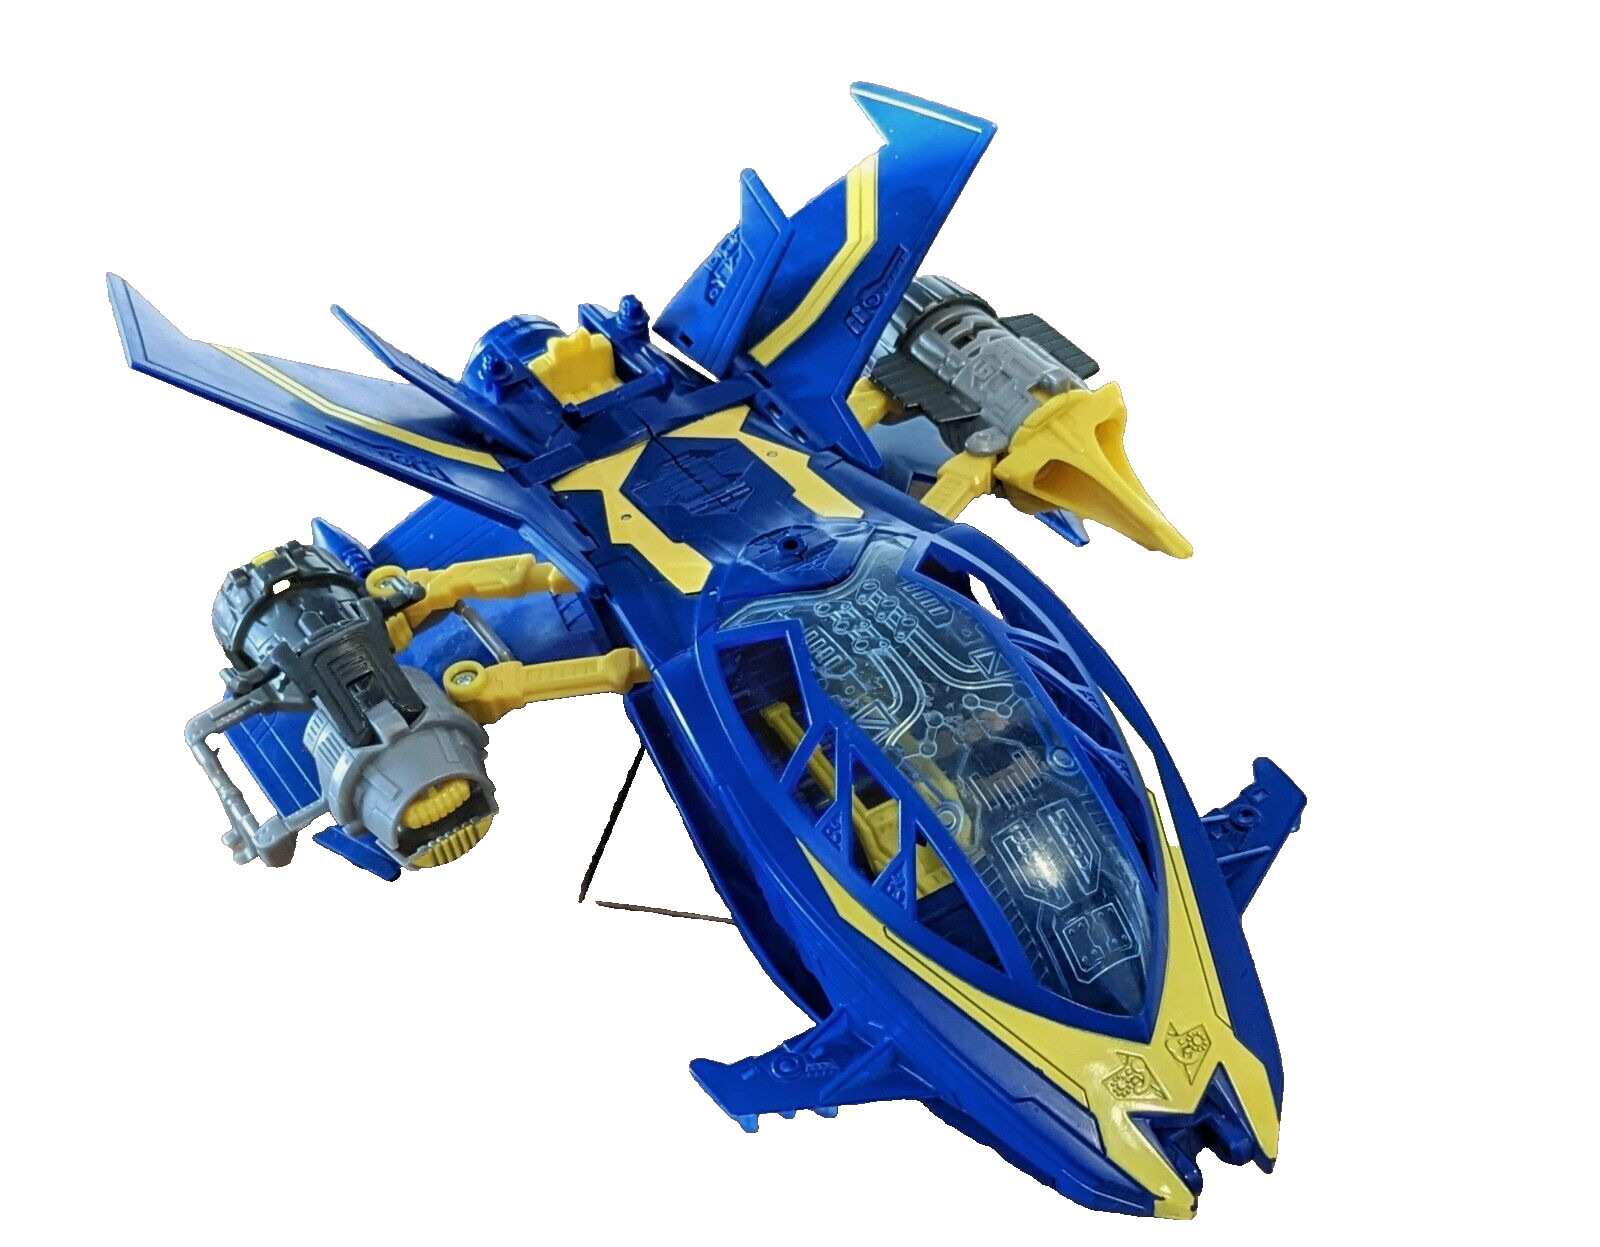 Transformers Beast hunters - Sky Claw vehicule Hasbro 2013 incomplete 